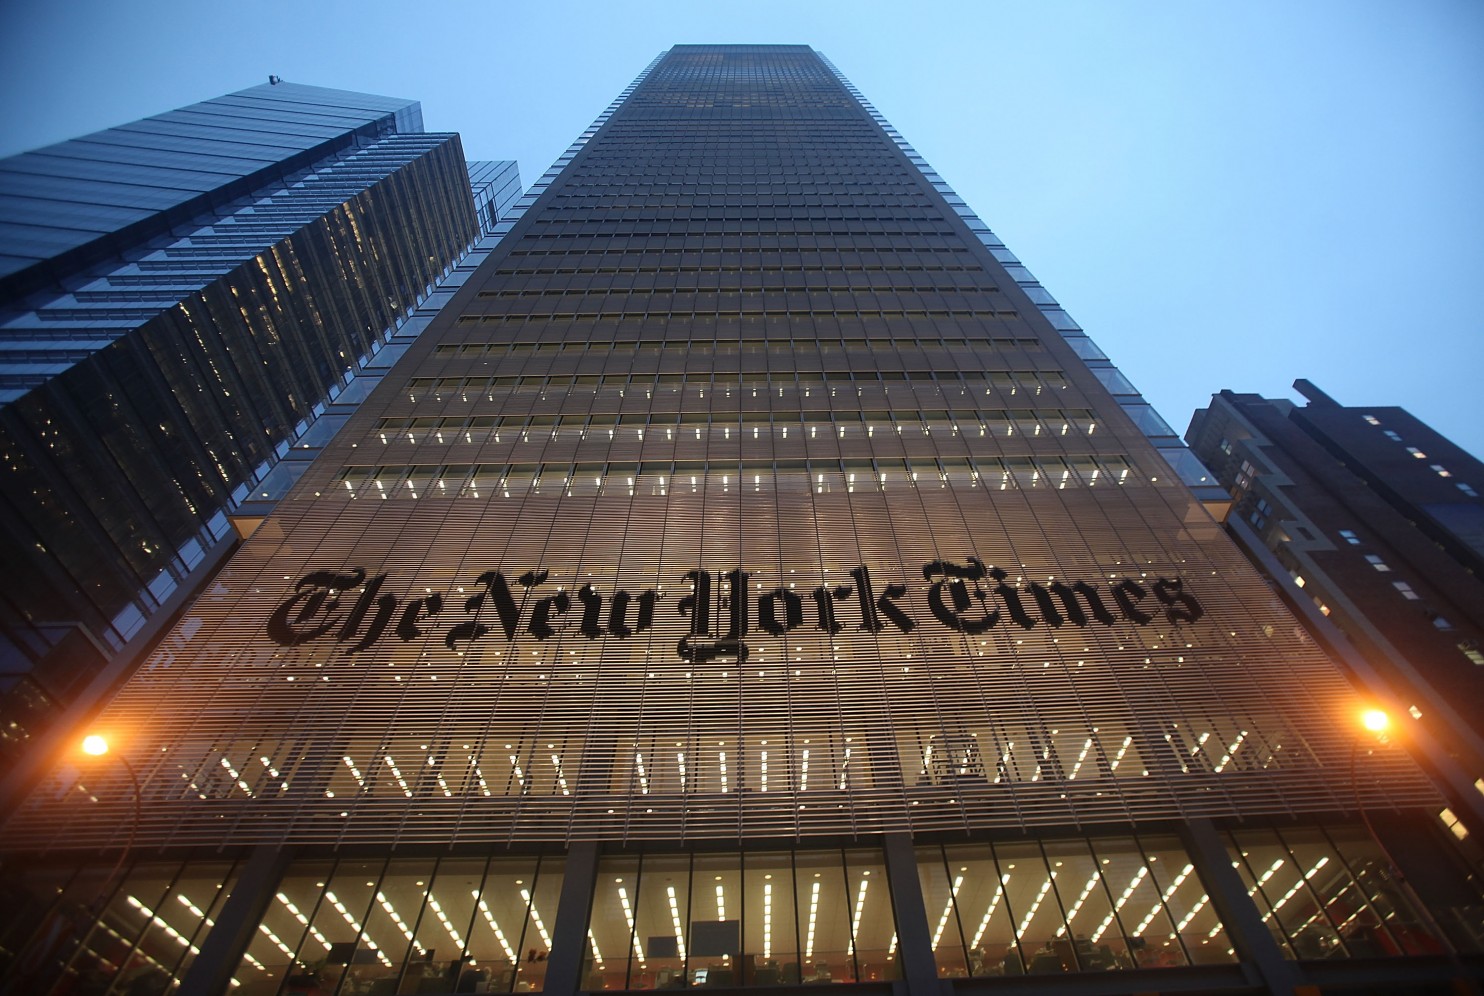  Con inédito editorial en español, New York Times llama a hispanos a “ser la diferencia”